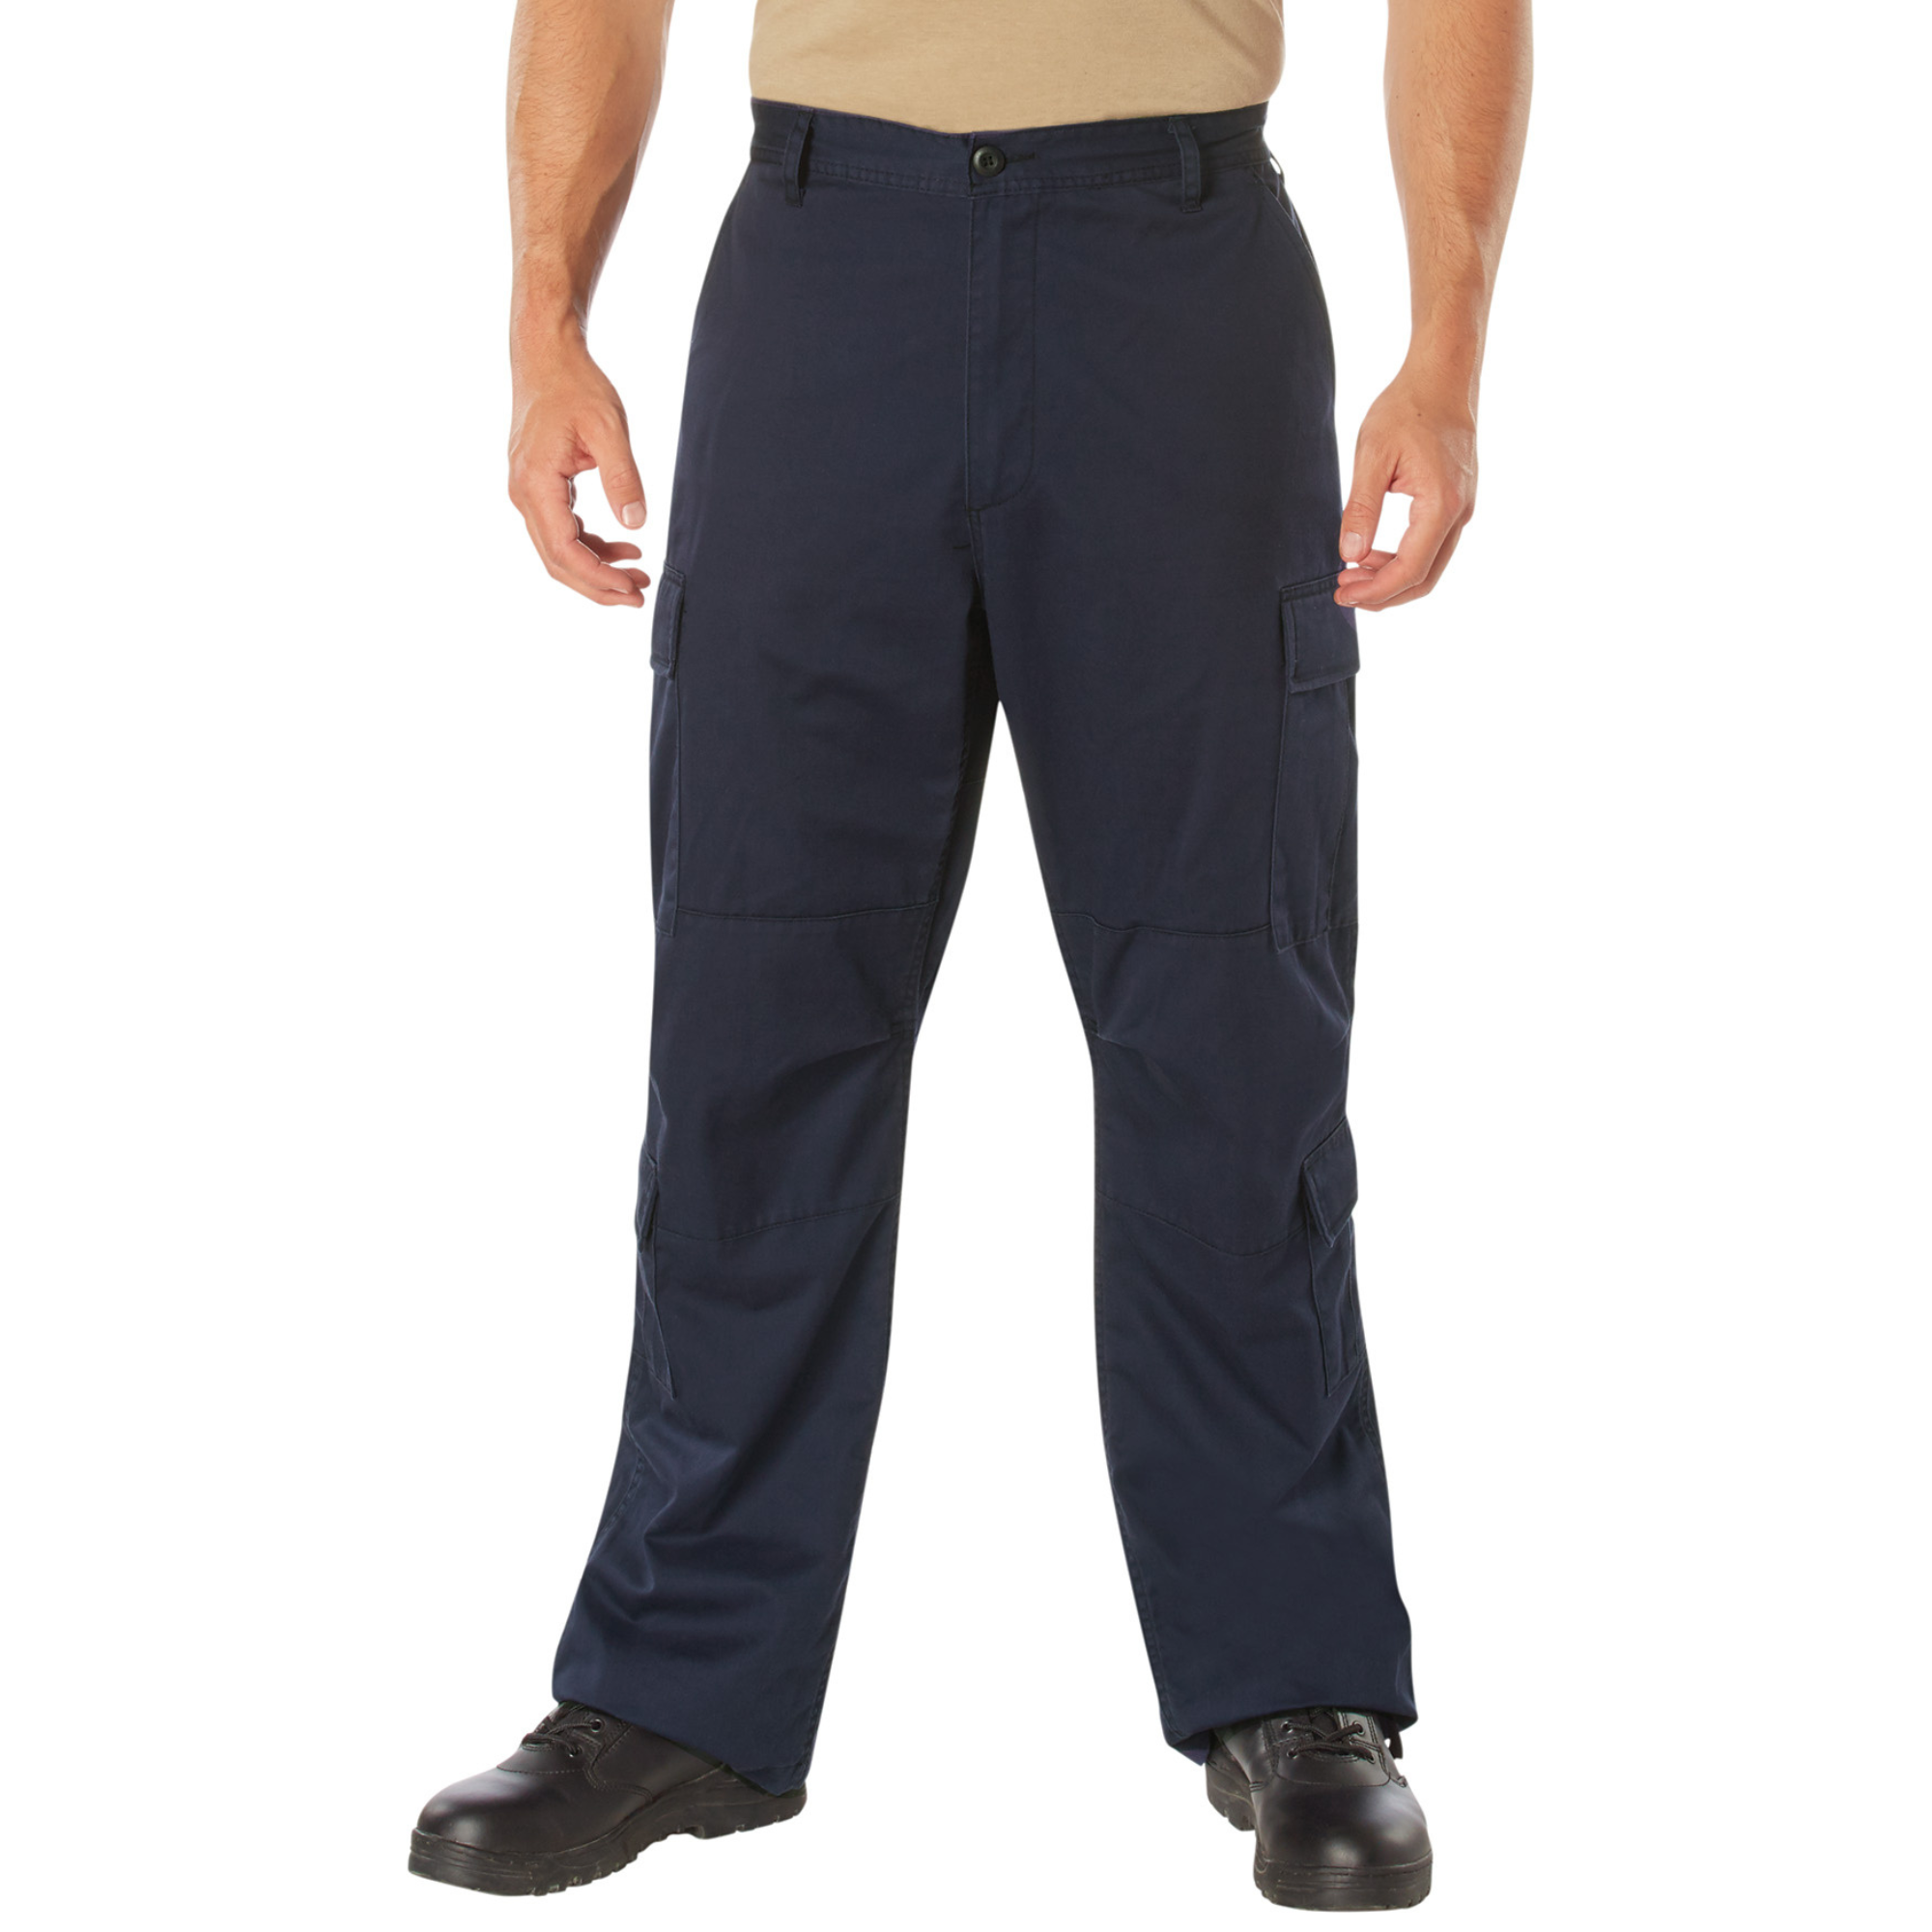 Men's Navy Blue Fatigue Pant - Rothco 6 Pocket Tactical Military